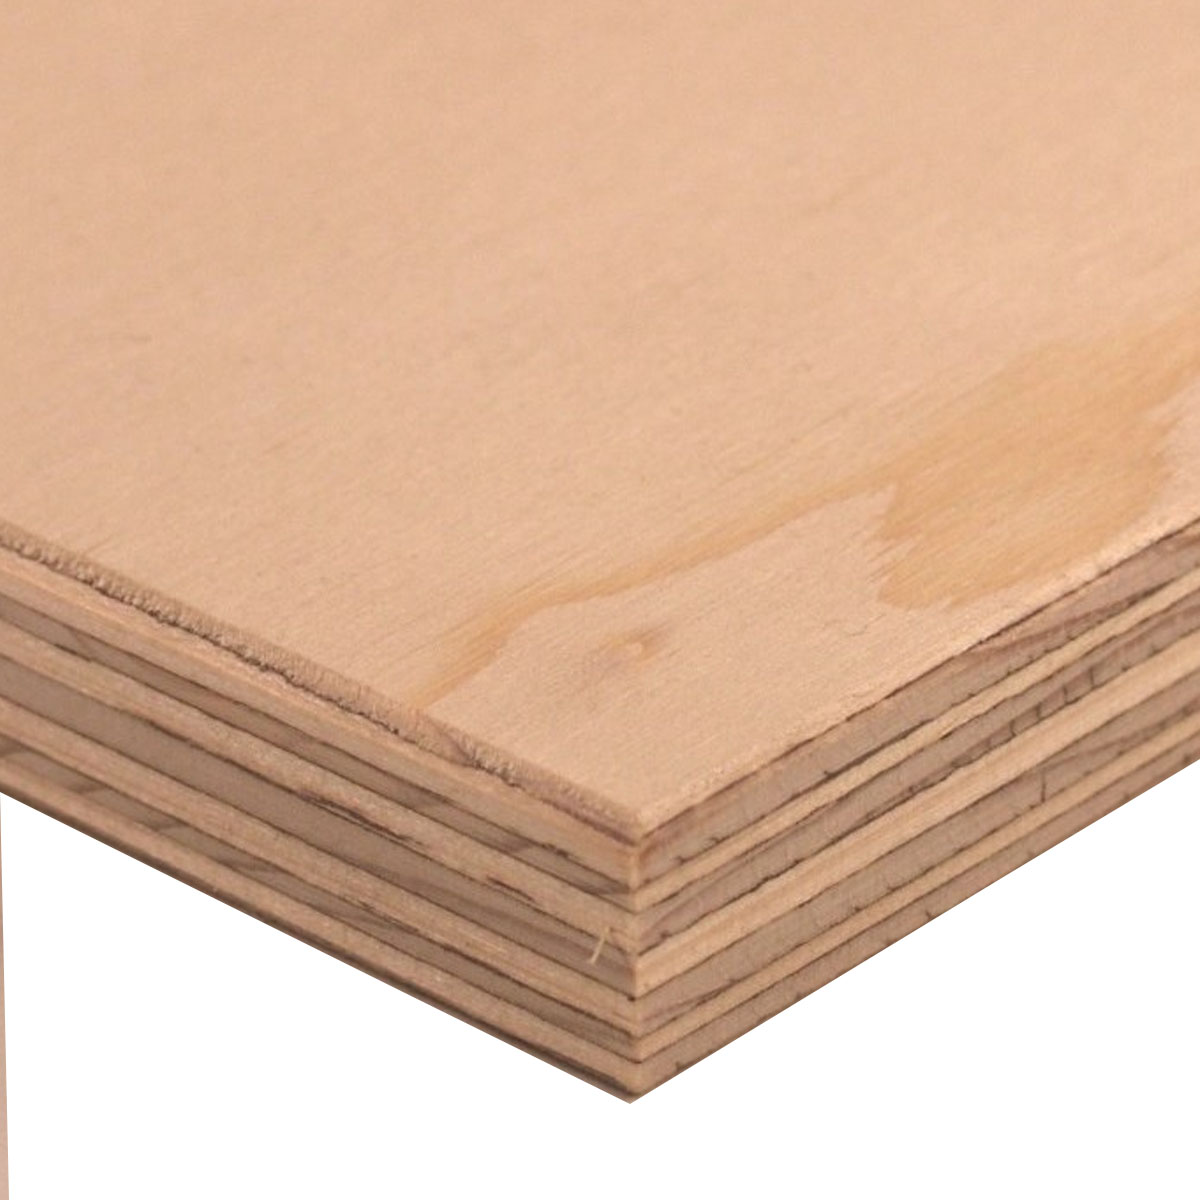 Standard Fir Plywood - TG - 4 x 8 - 18.5 mm - 3/4-in